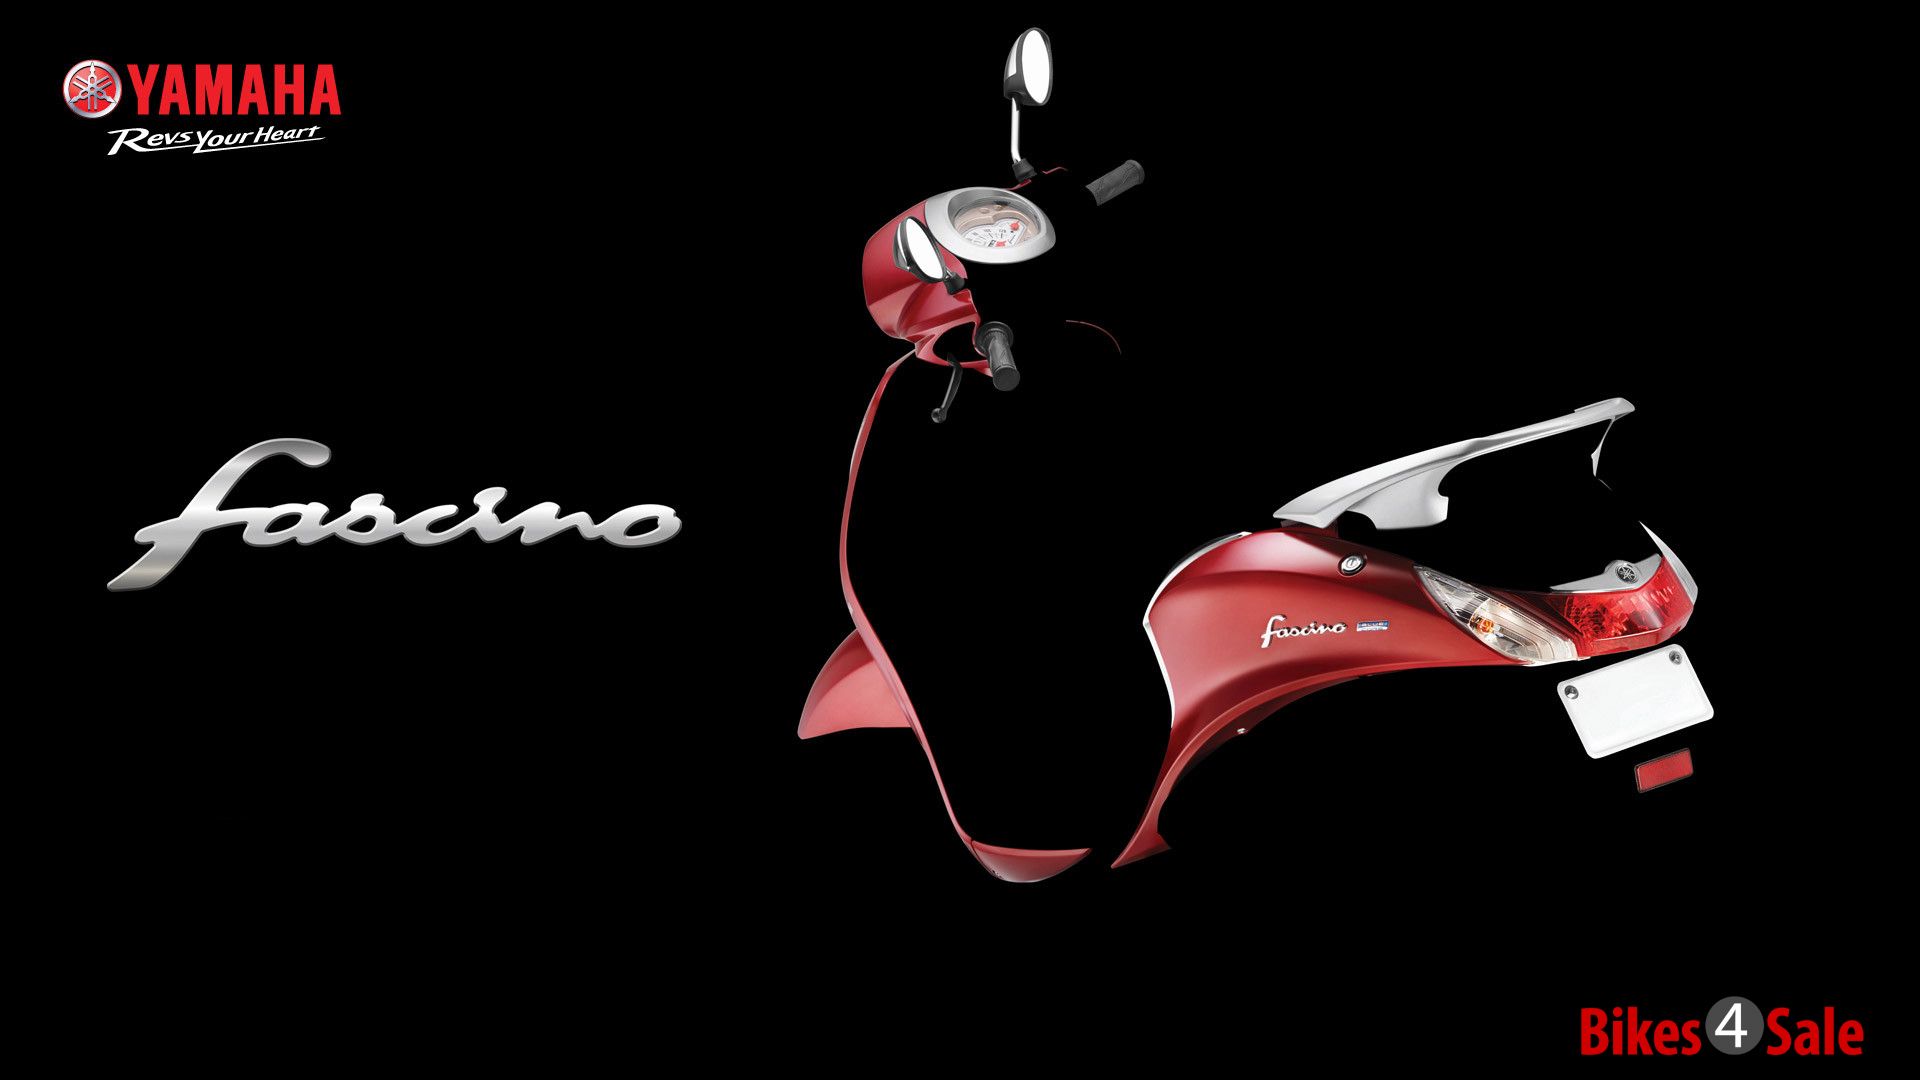 Yamaha Fascino - Red Colour